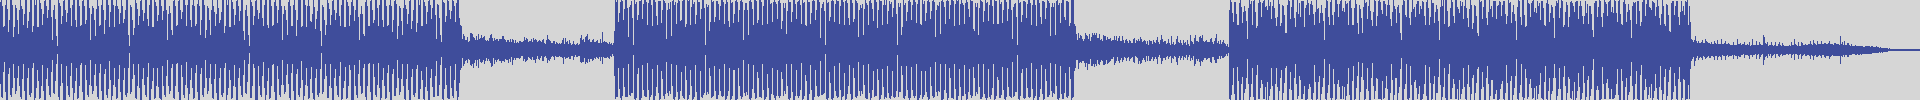 nf_boyz_records [NFY054] Mimox - Minimal Bass [After Mix] audio wave form